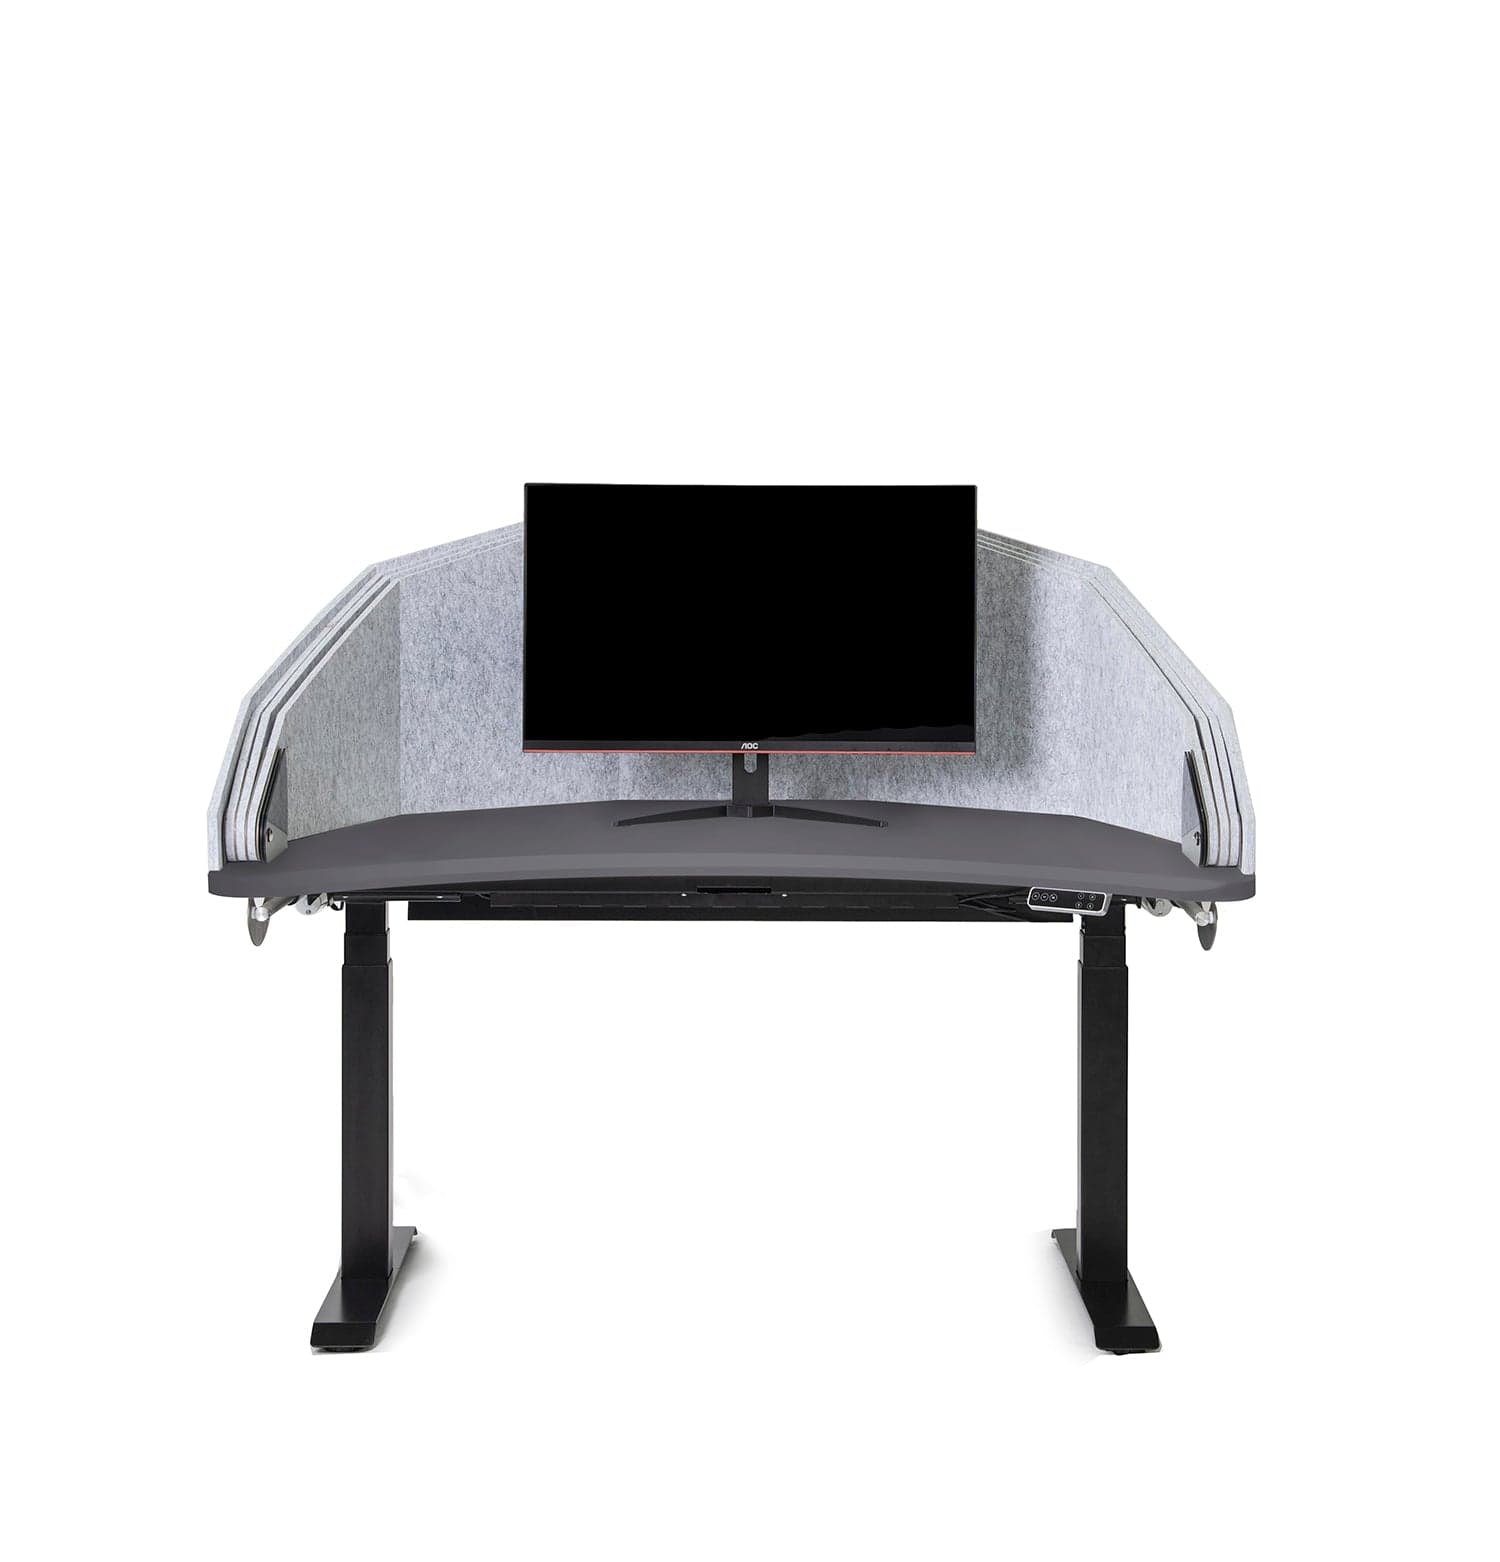 MojoDome: Desk + Acoustic Panels + 3 Accessories